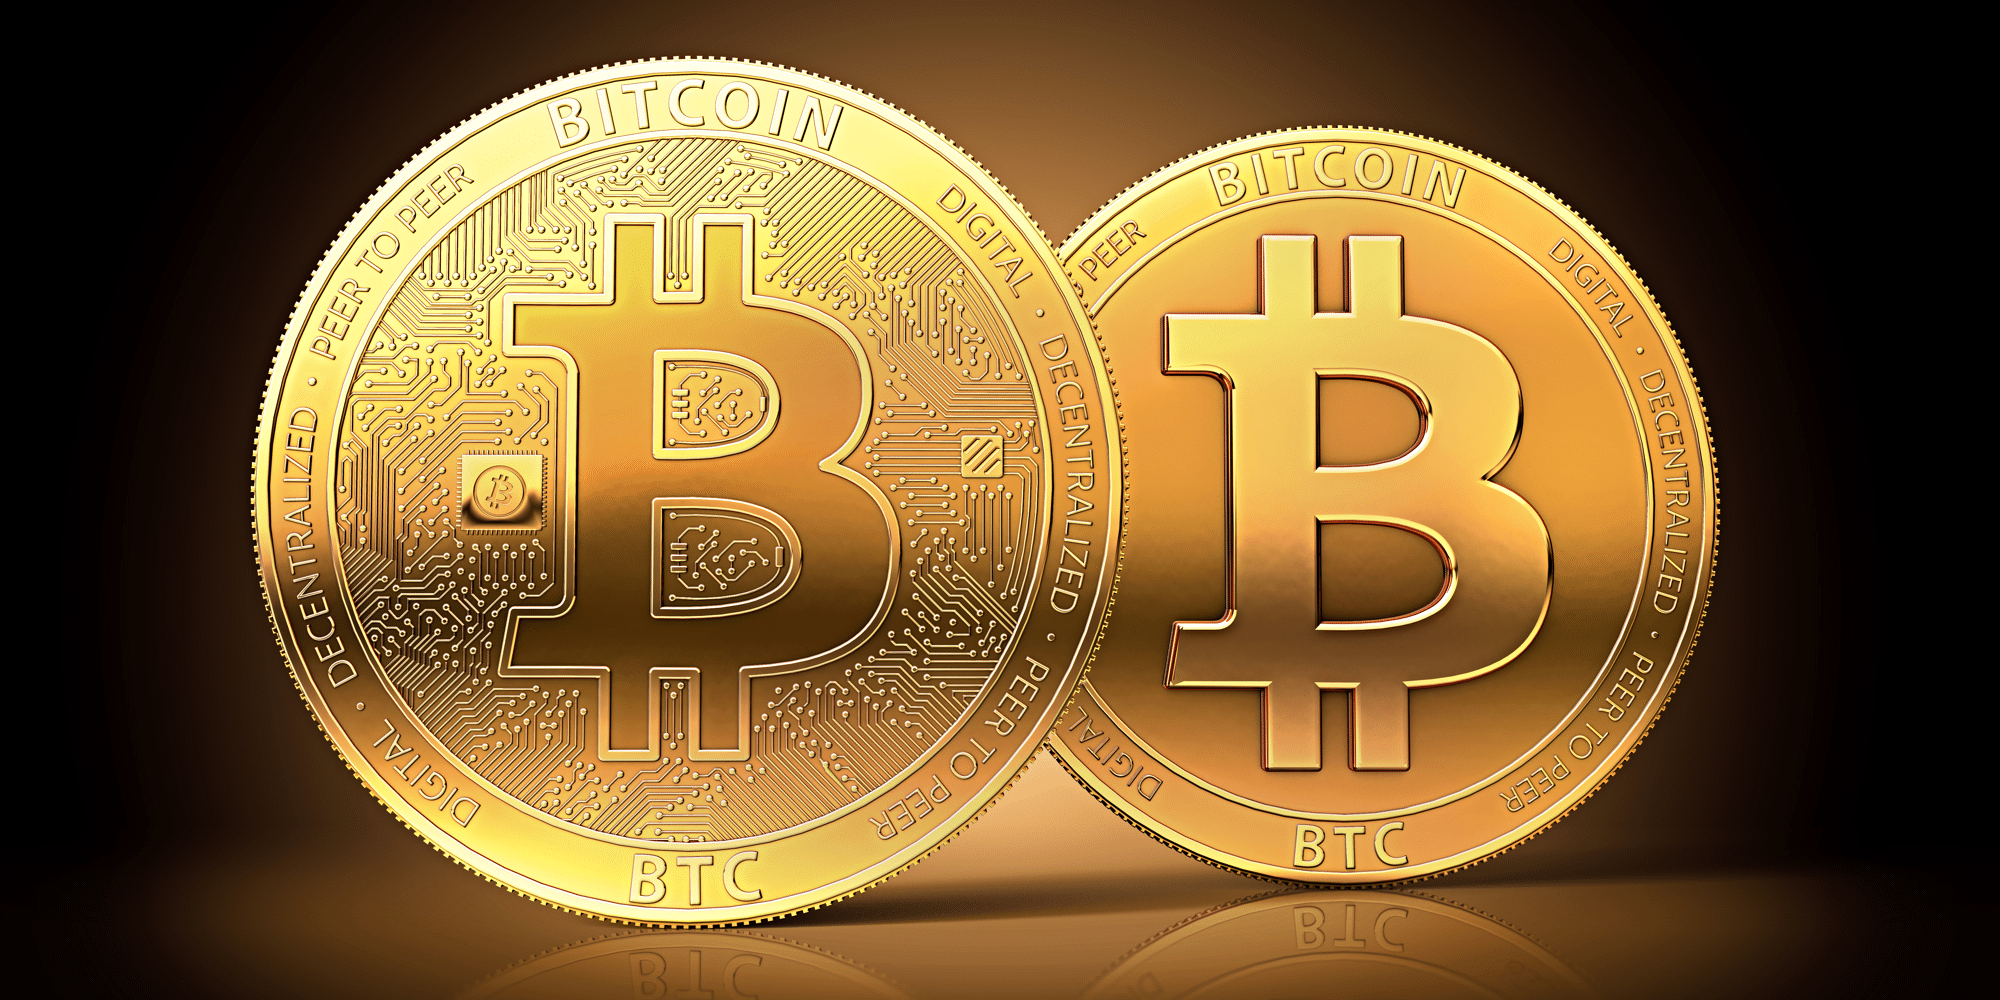 Will bitcoin cash holders receive new coins in fork отзывы об обмене валют корона